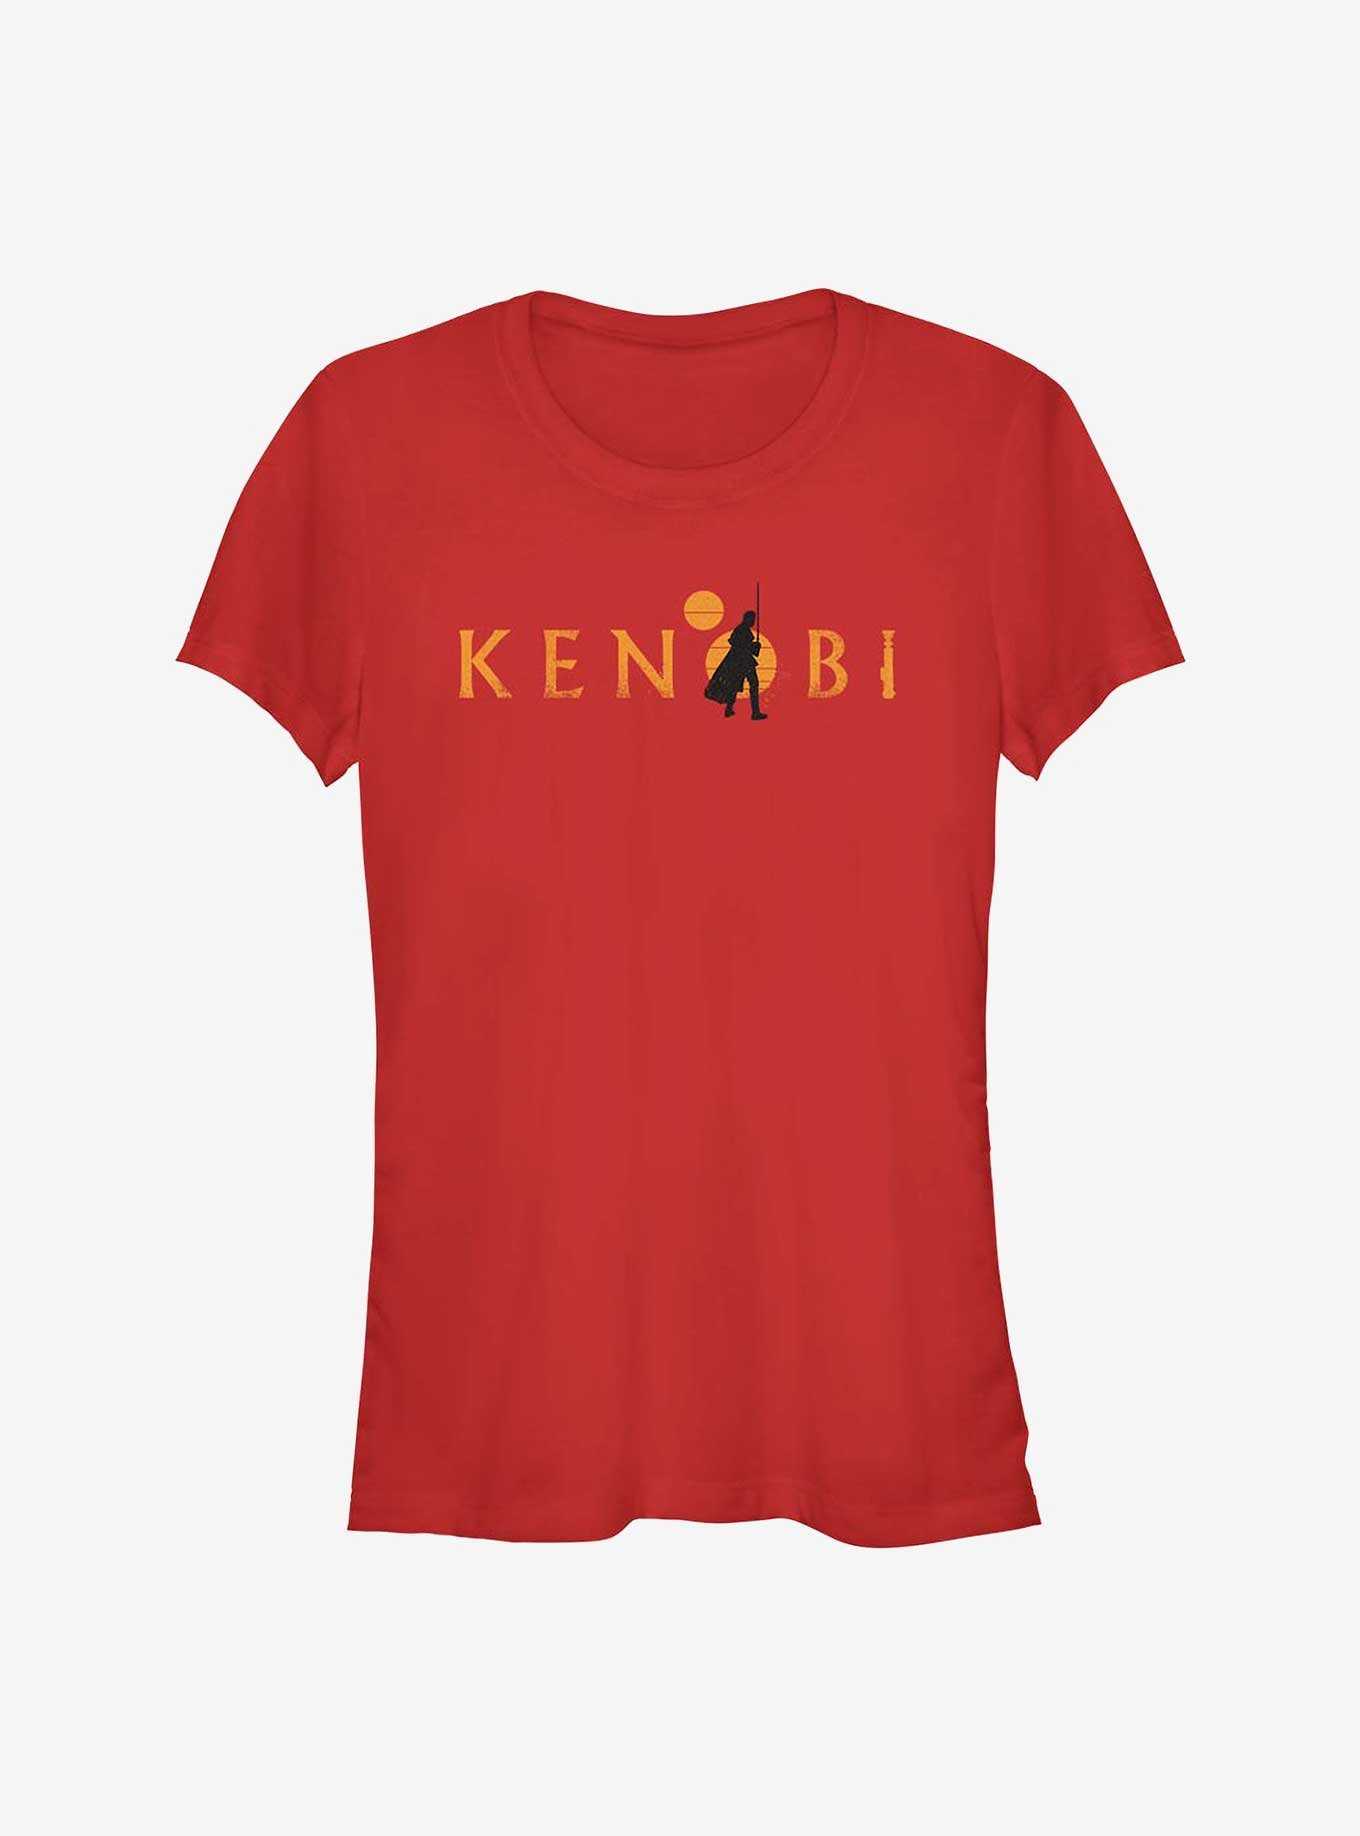 Star Wars Obi-Wan Kenobi Two Suns Logo Girls T-Shirt, , hi-res